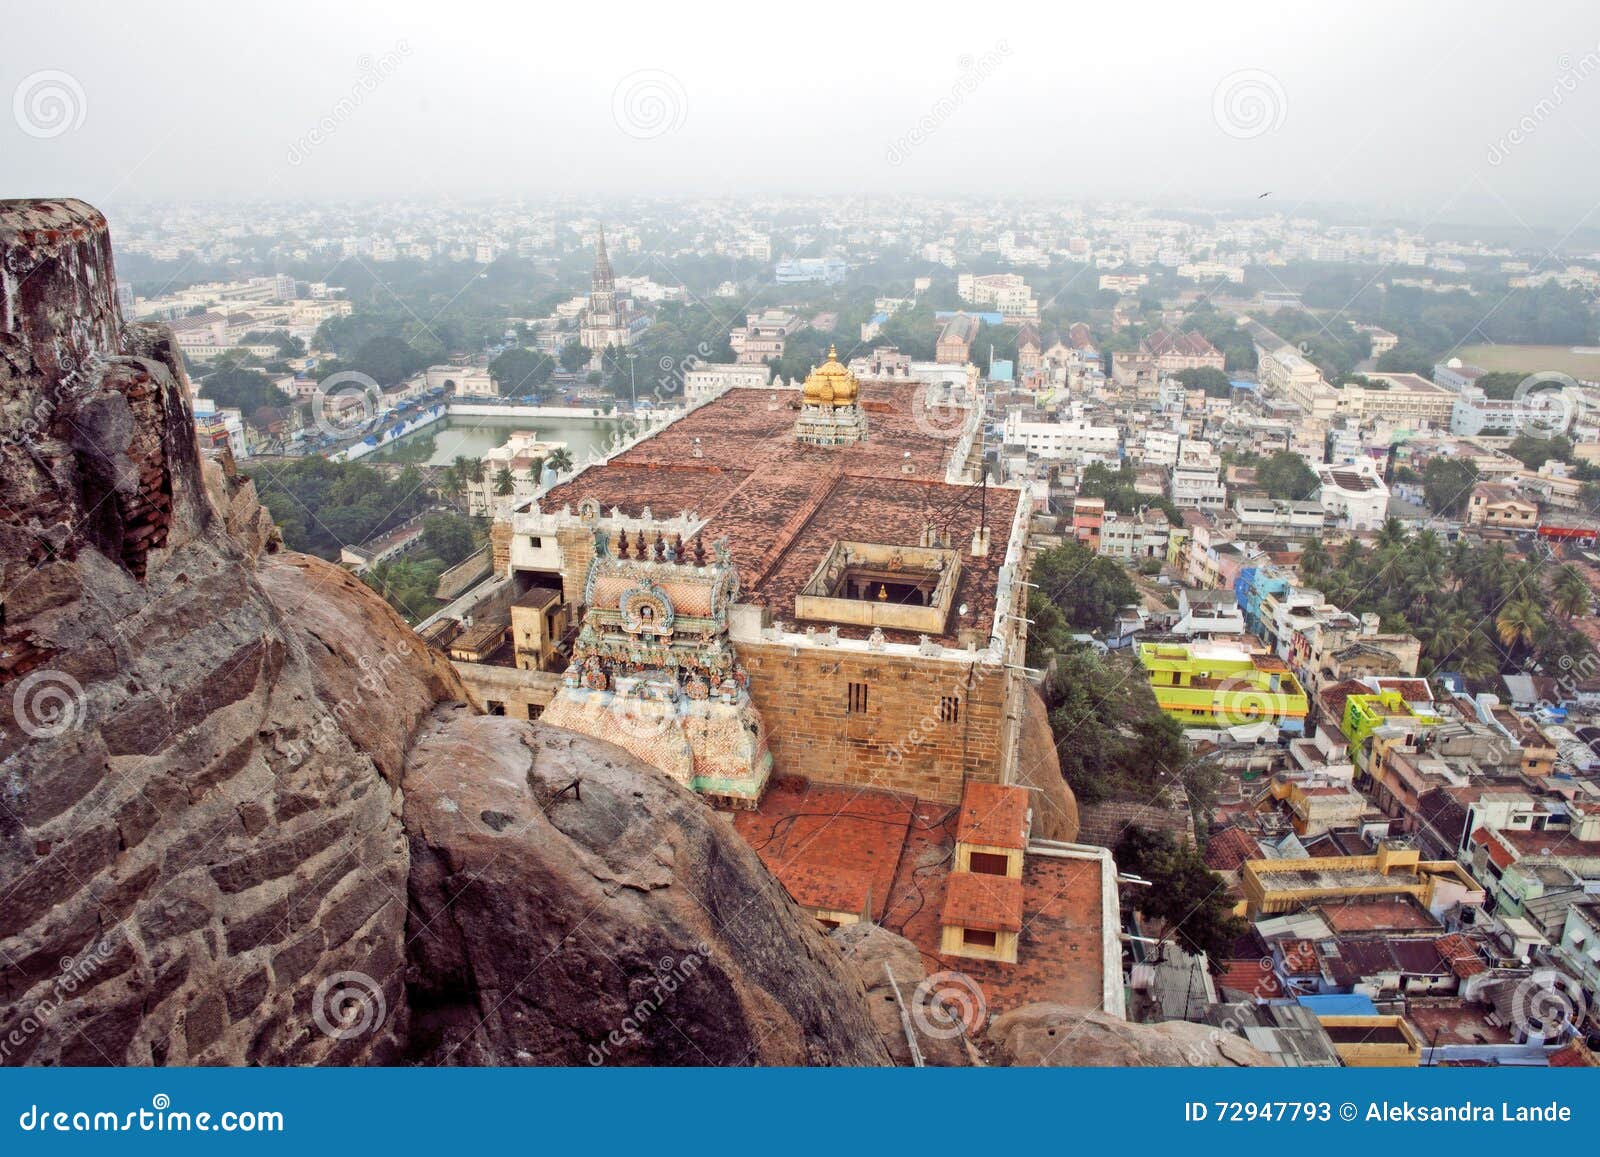 Famous Rockfort Ucchi Pillayar Temple Stock Image - Image of ...